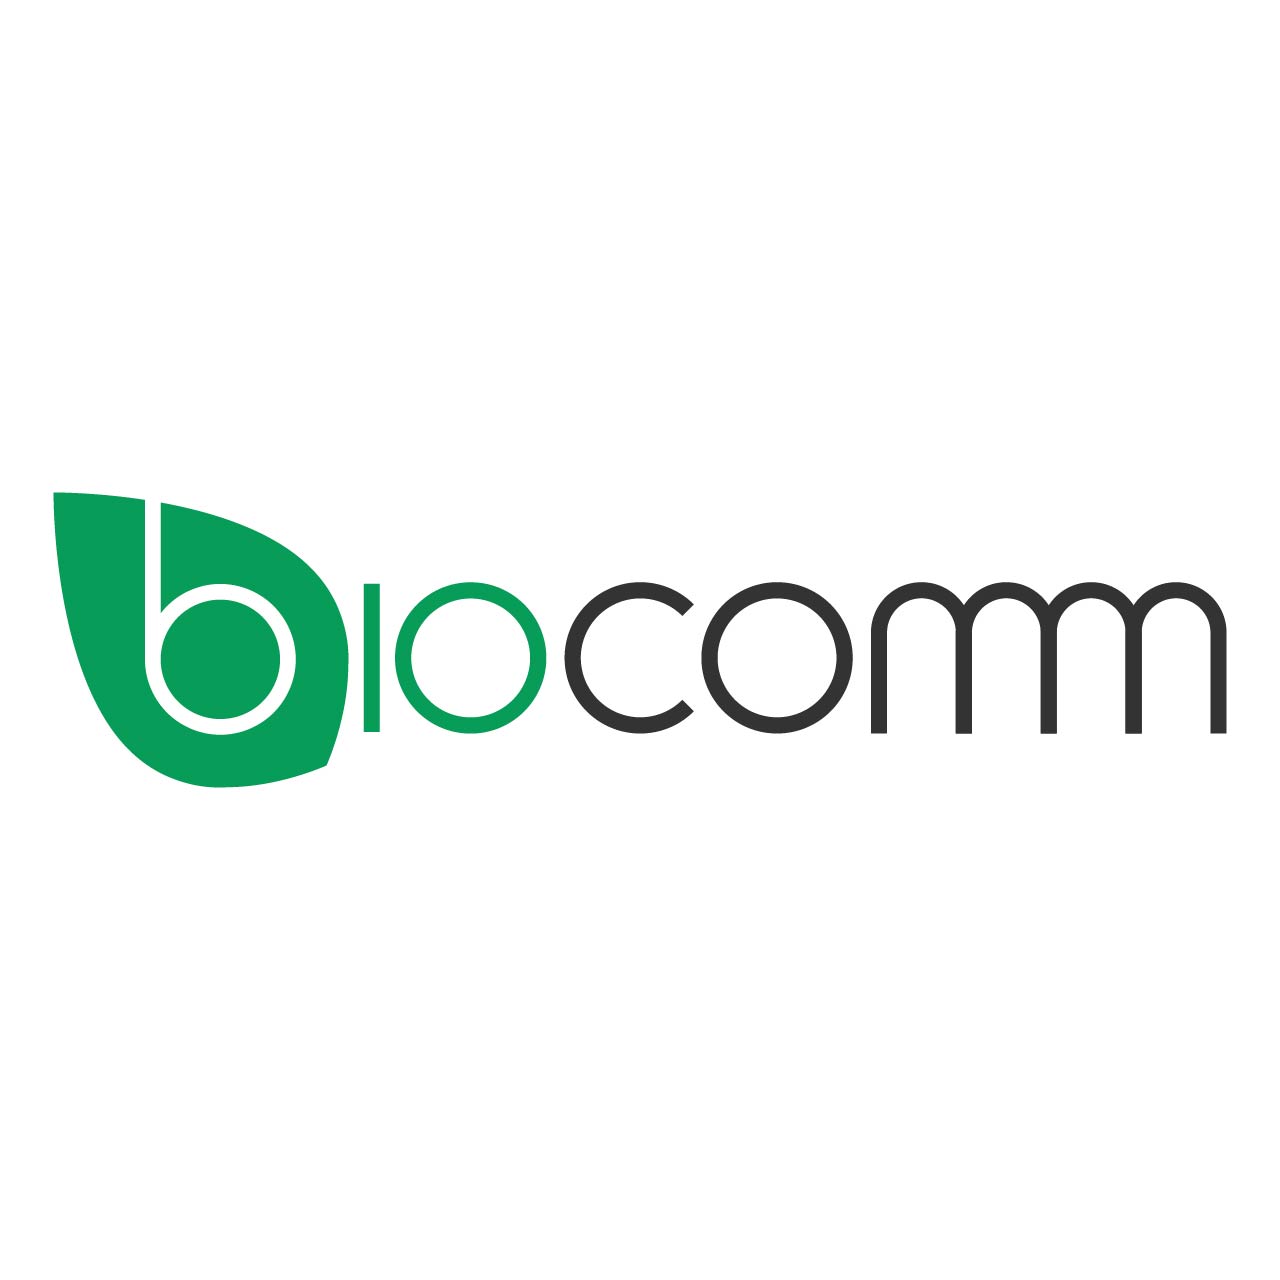 Biocomm Pte. Ltd. company logo